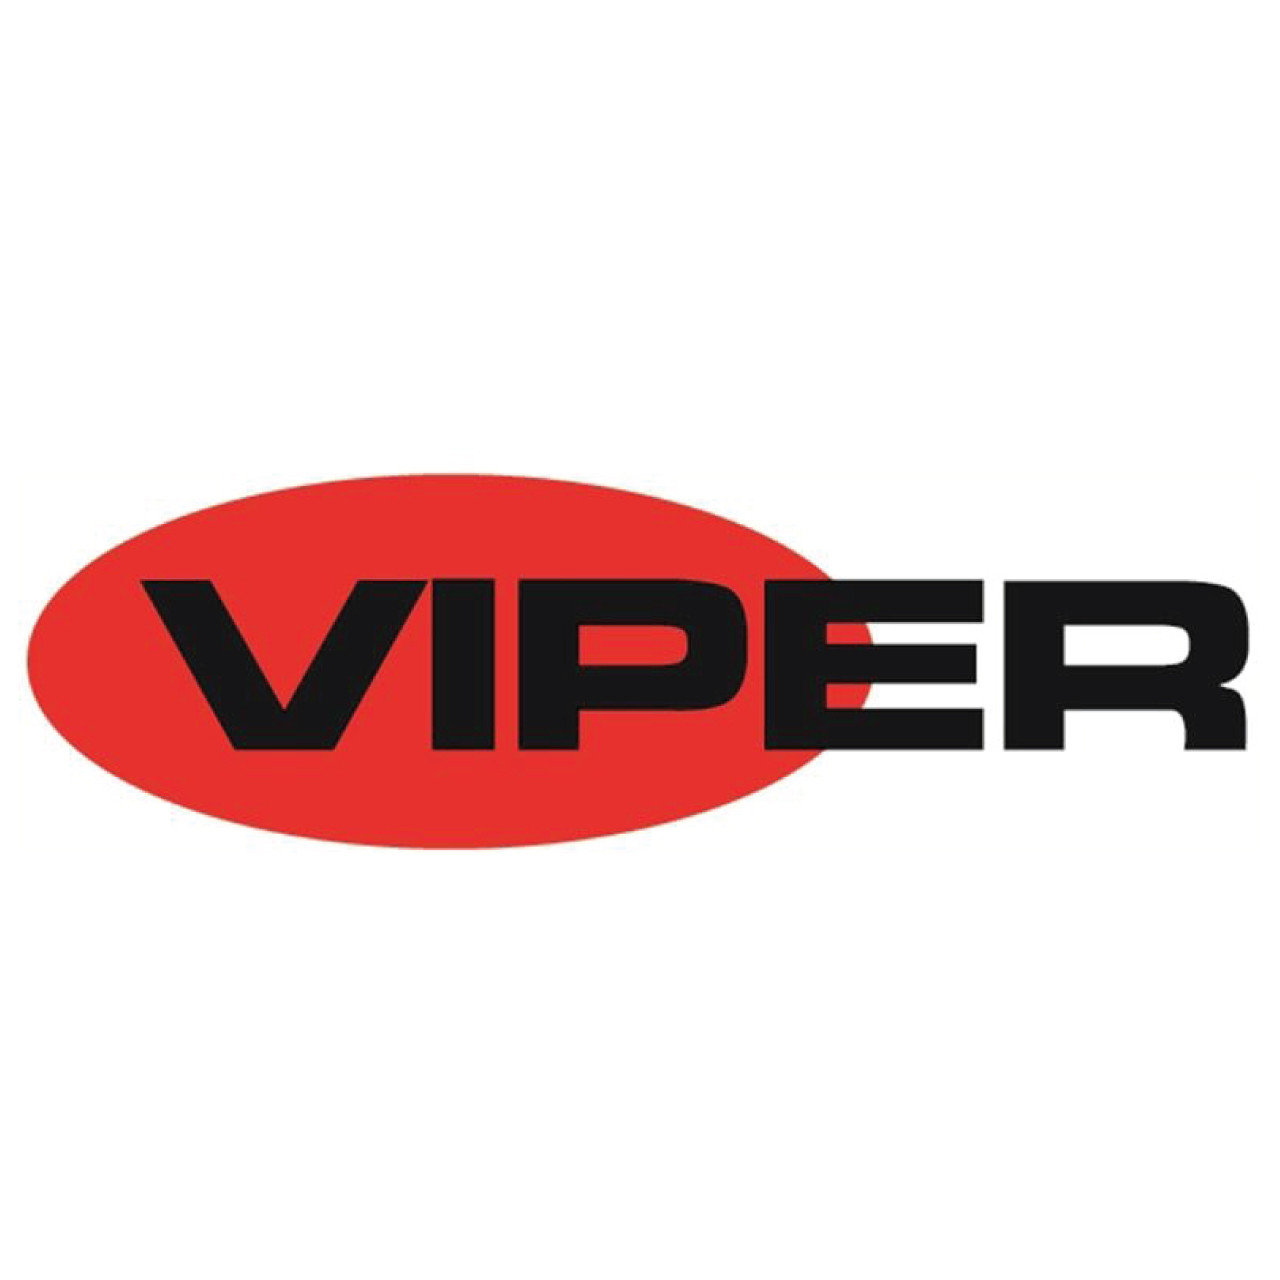 VIPER EQUIPMENT PART # 107412106 ATTIX 44-2L IC 230V 50HZ EU PICTURE